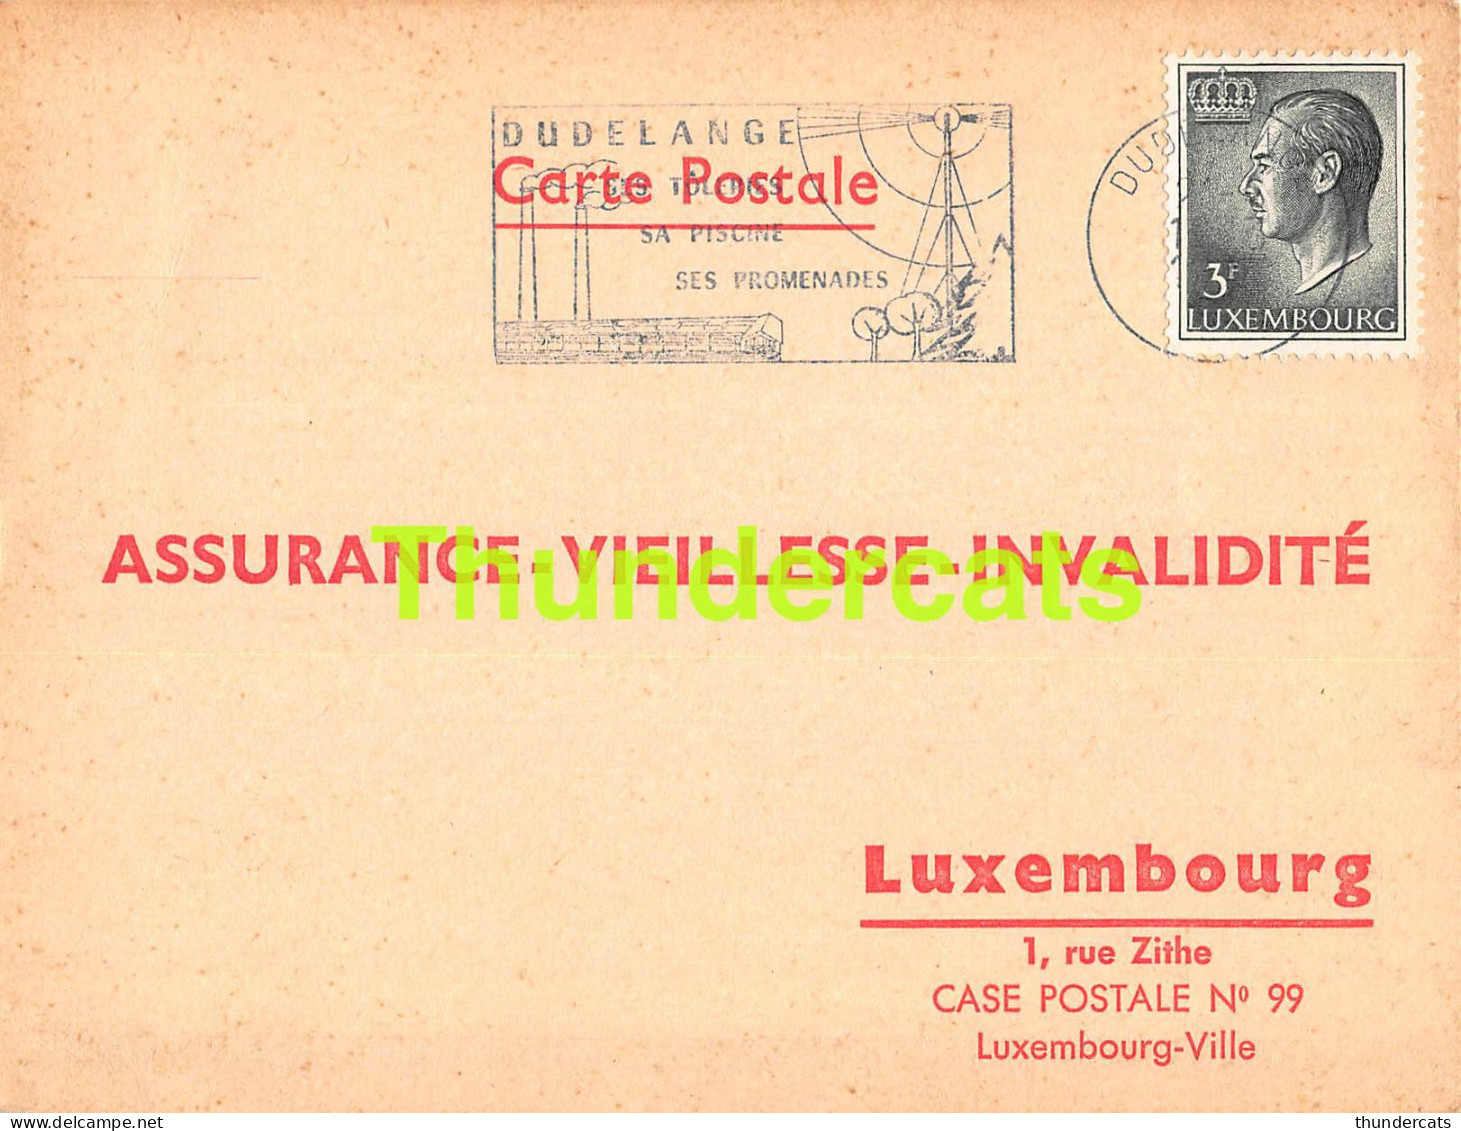 ASSURANCE VIEILLESSE INVALIDITE LUXEMBOURG 1973 NOTHAR STROH DUDELANGE  - Lettres & Documents